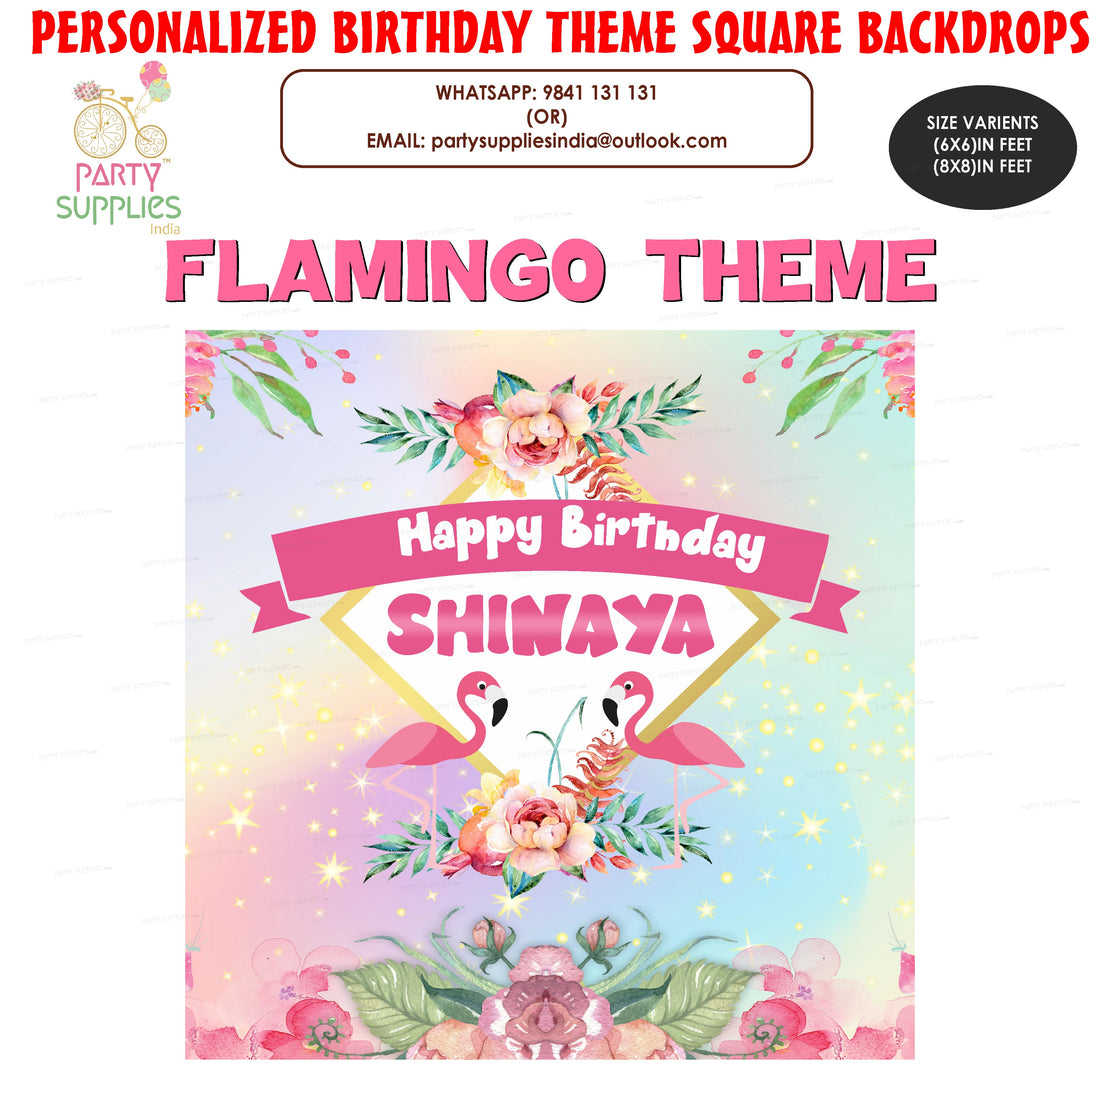 PSI Flamingo Theme Classic Square Backdrop